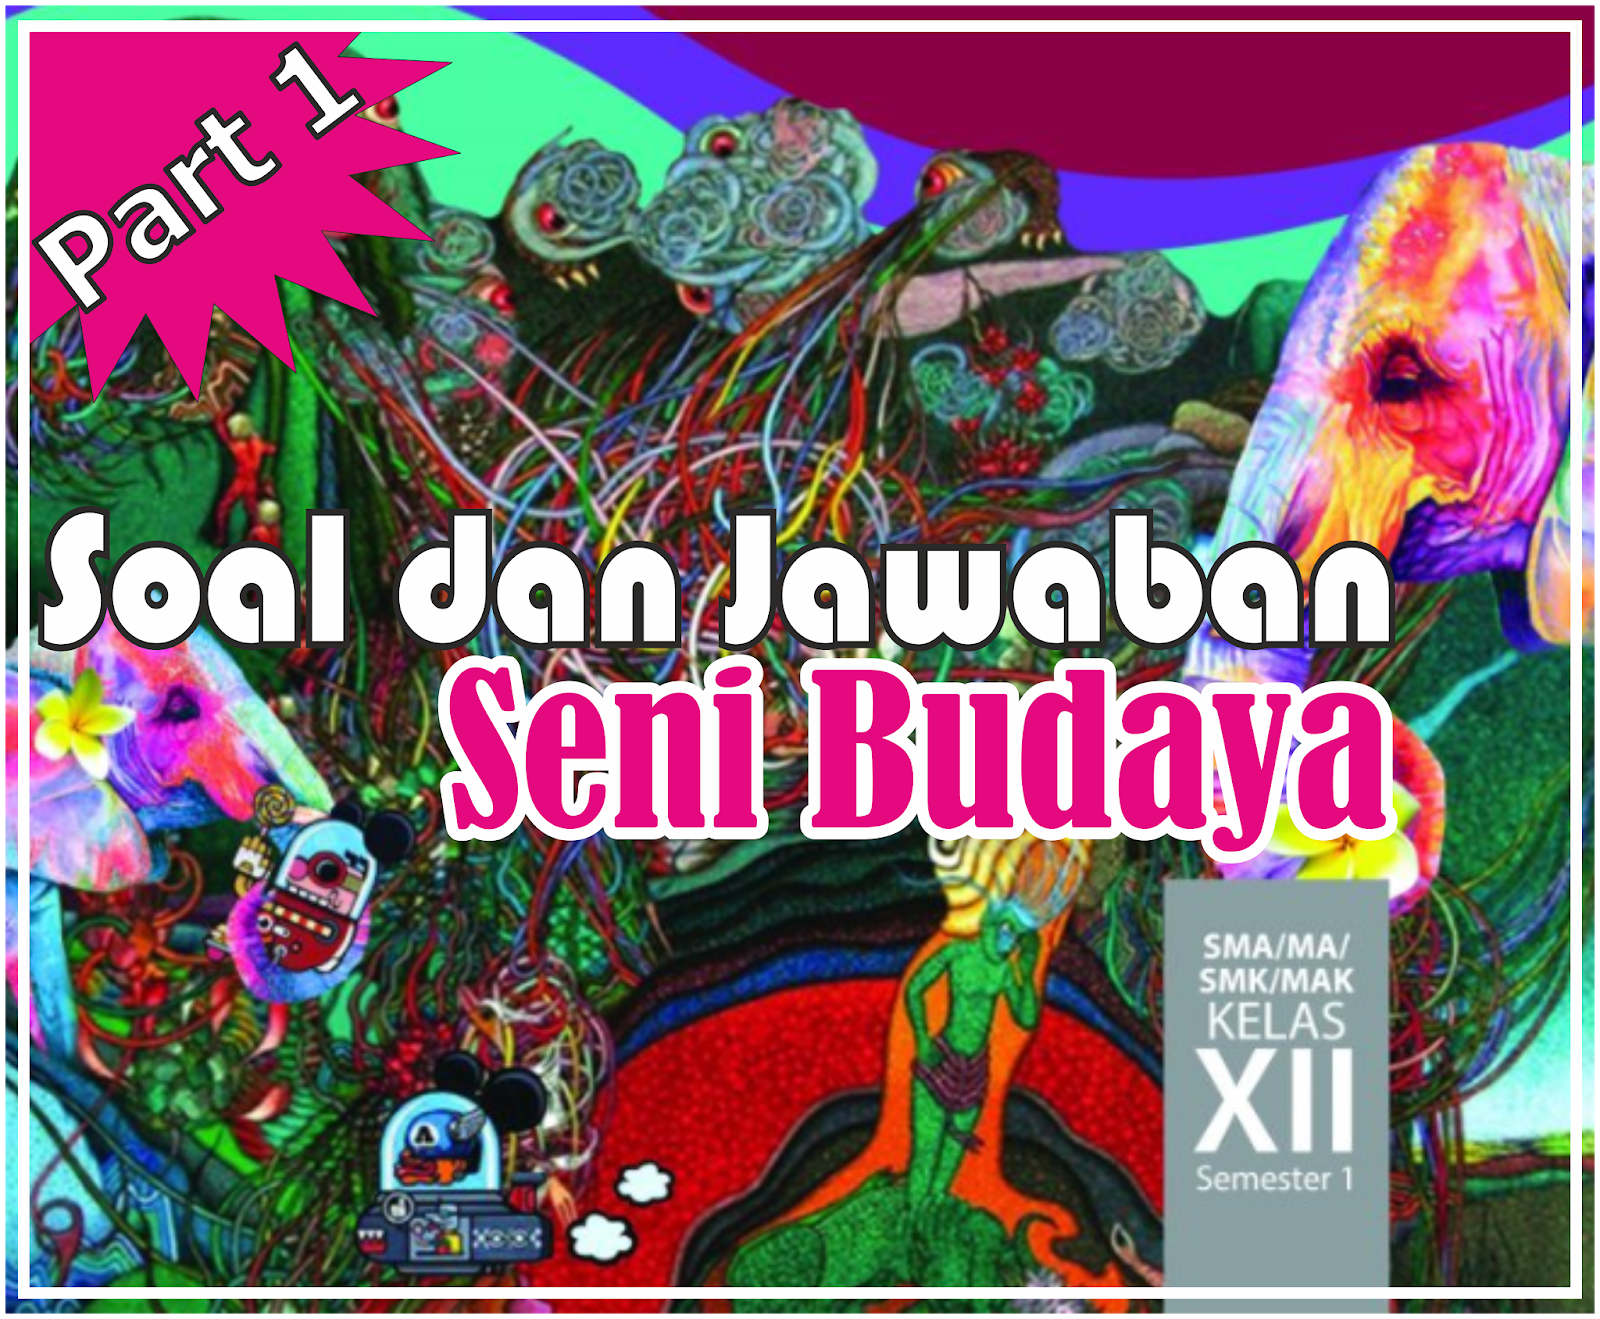 Soal Dan Jawaban Seni Budaya Kelas Xii Part 1 Ayfame Productions Official